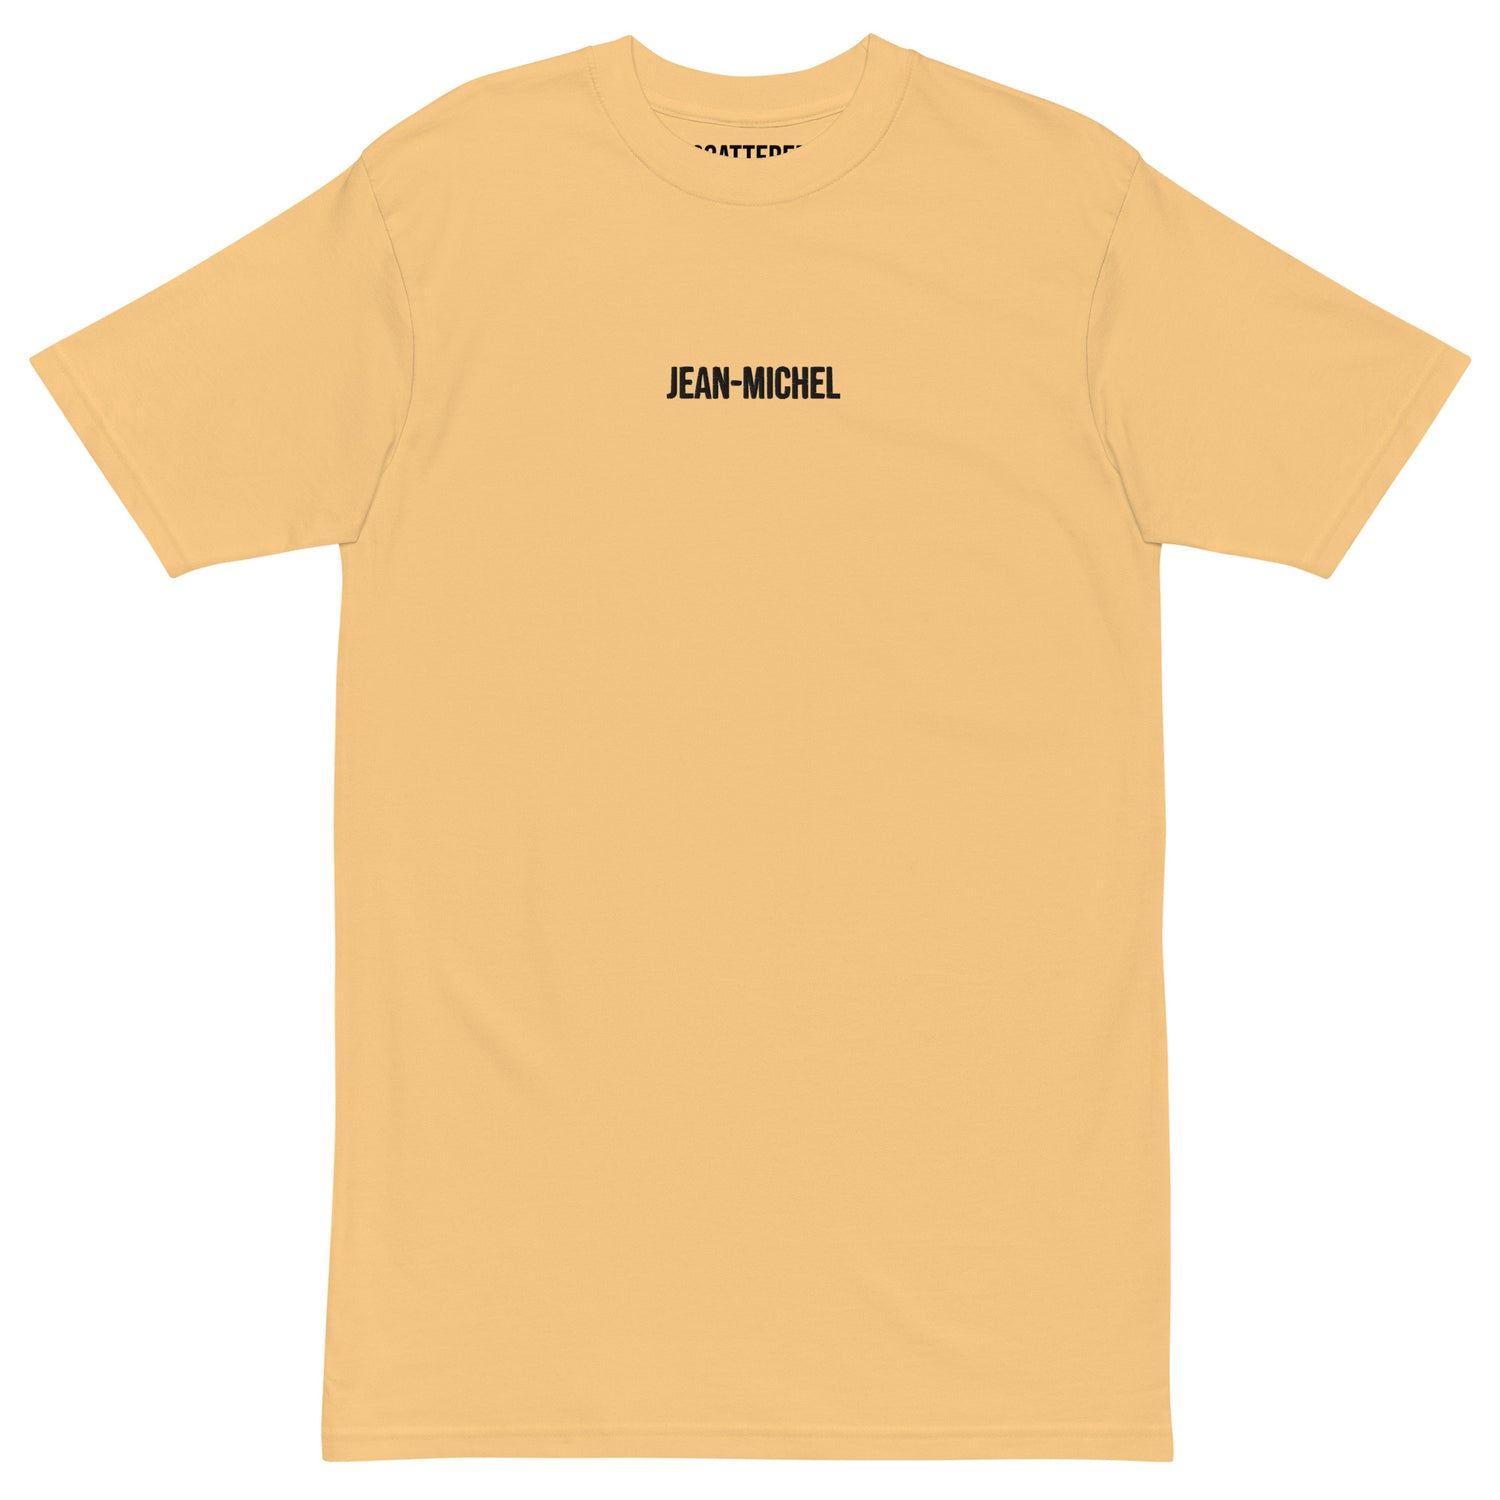 Jean-Michel Basquiat "In Italian" Artwork Embroidered and Printed Premium Streetwear T-Shirt Yellow